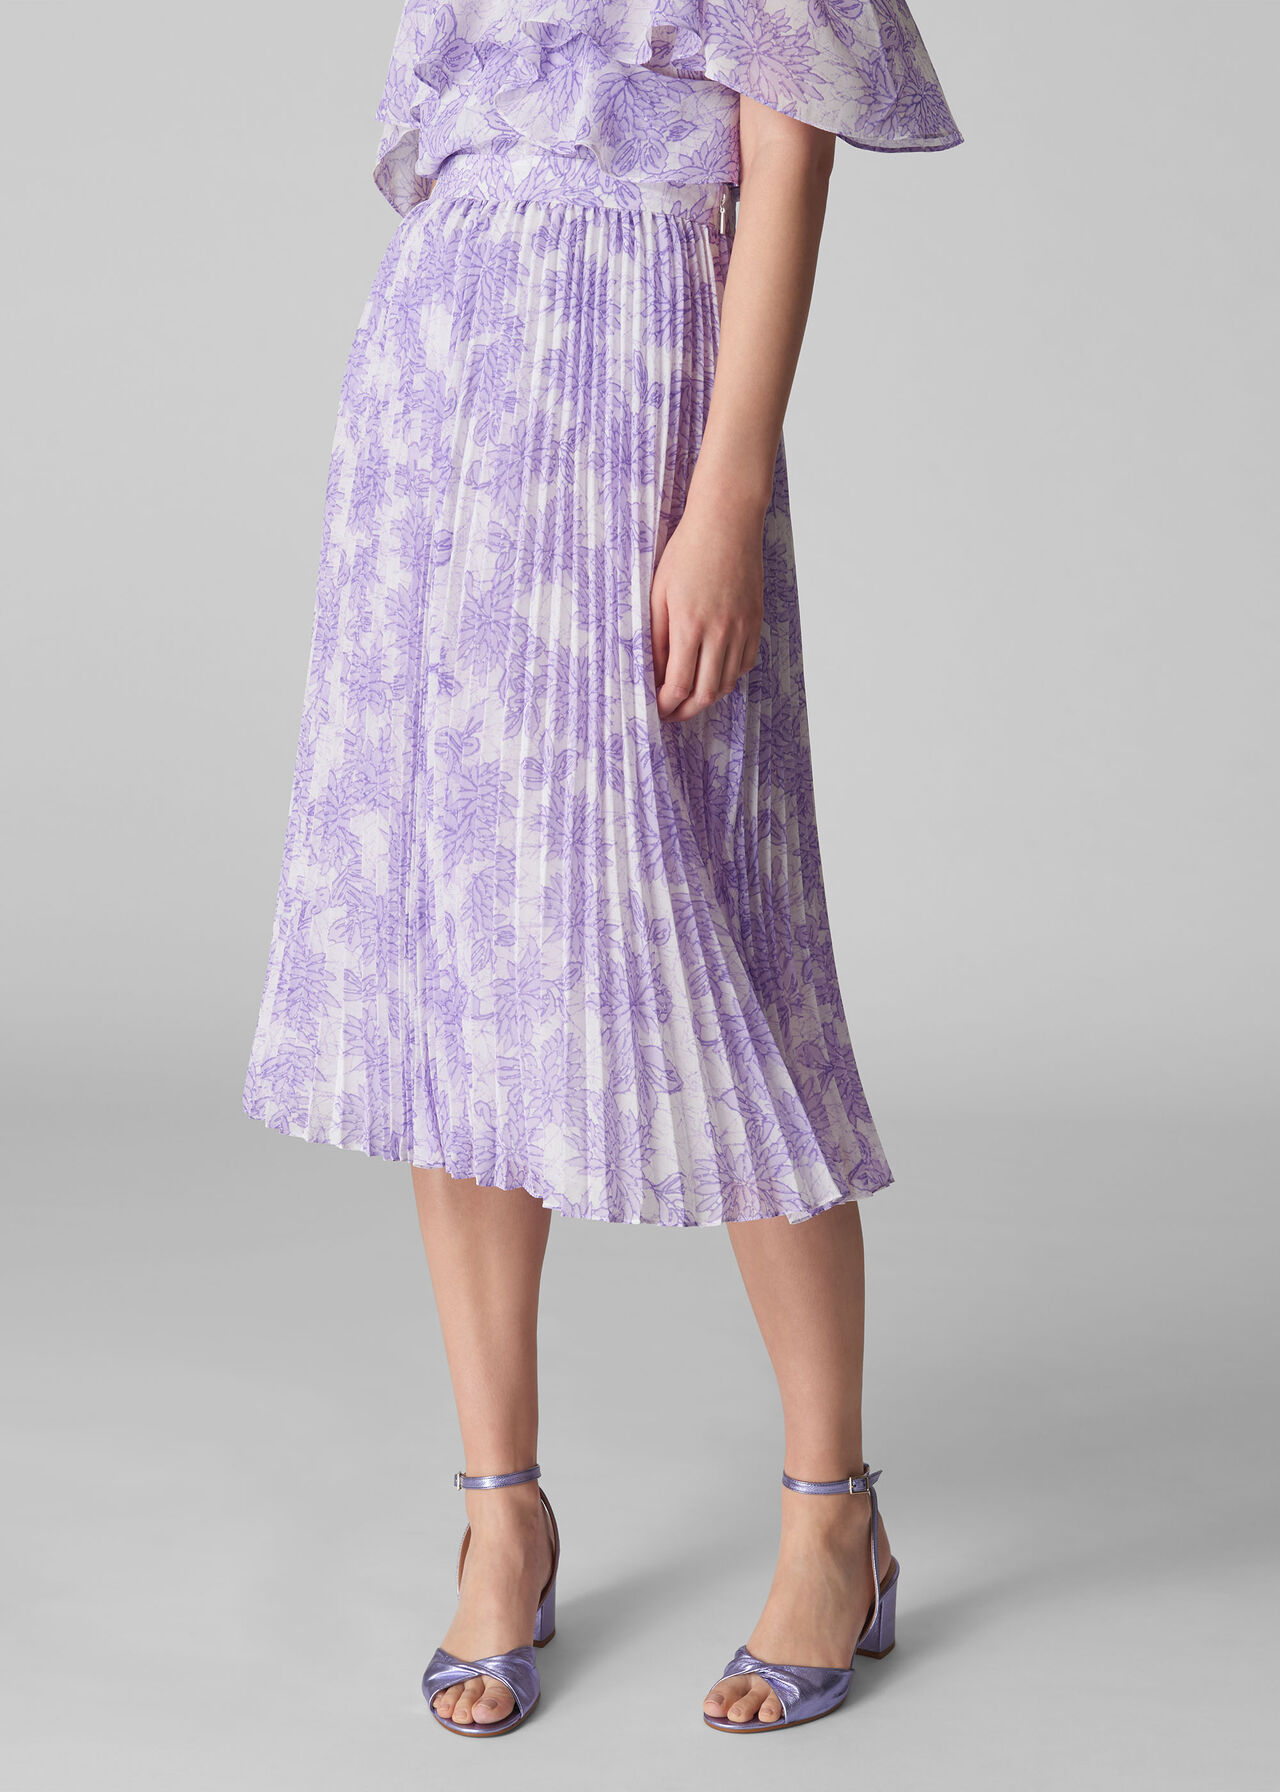 Batik Lily Print Pleated Skirt